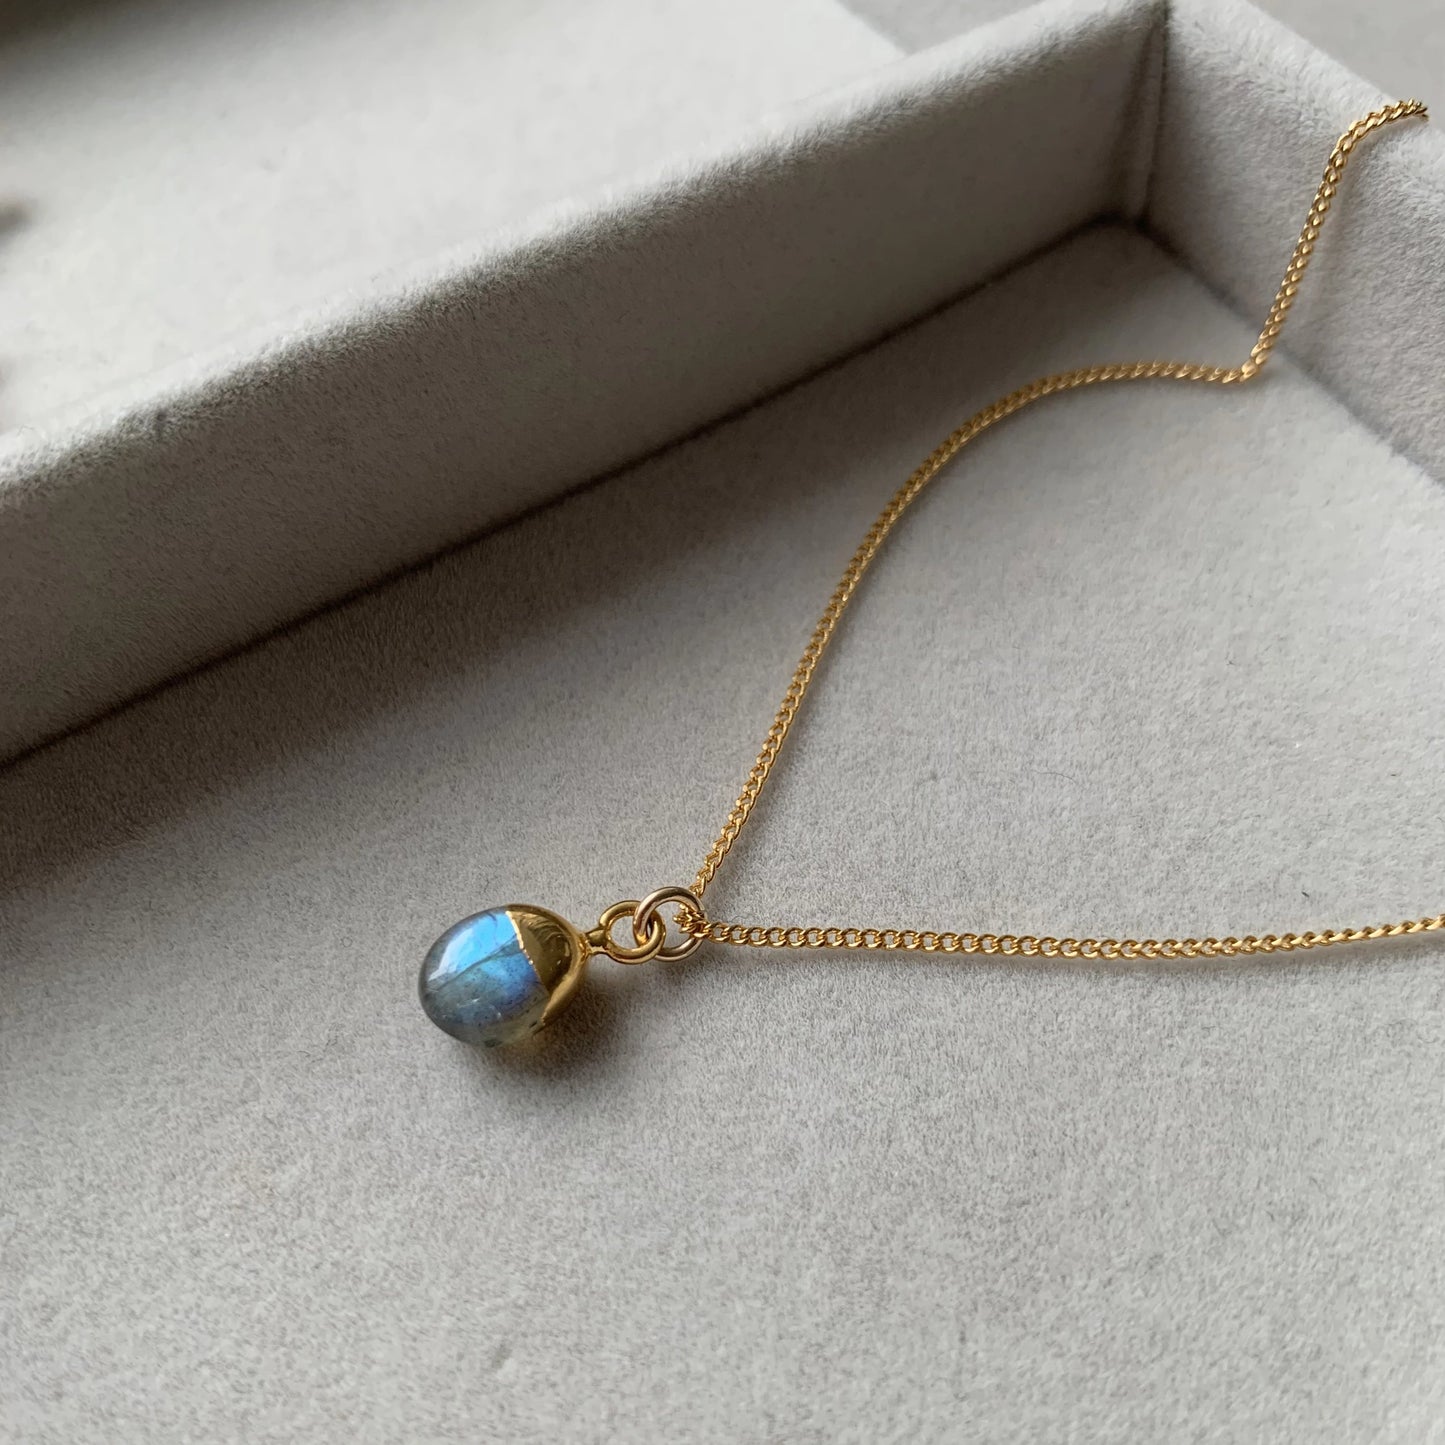 Tiny Tumbled Gemstone Necklace - Labradorite (Adventure) - Decadorn